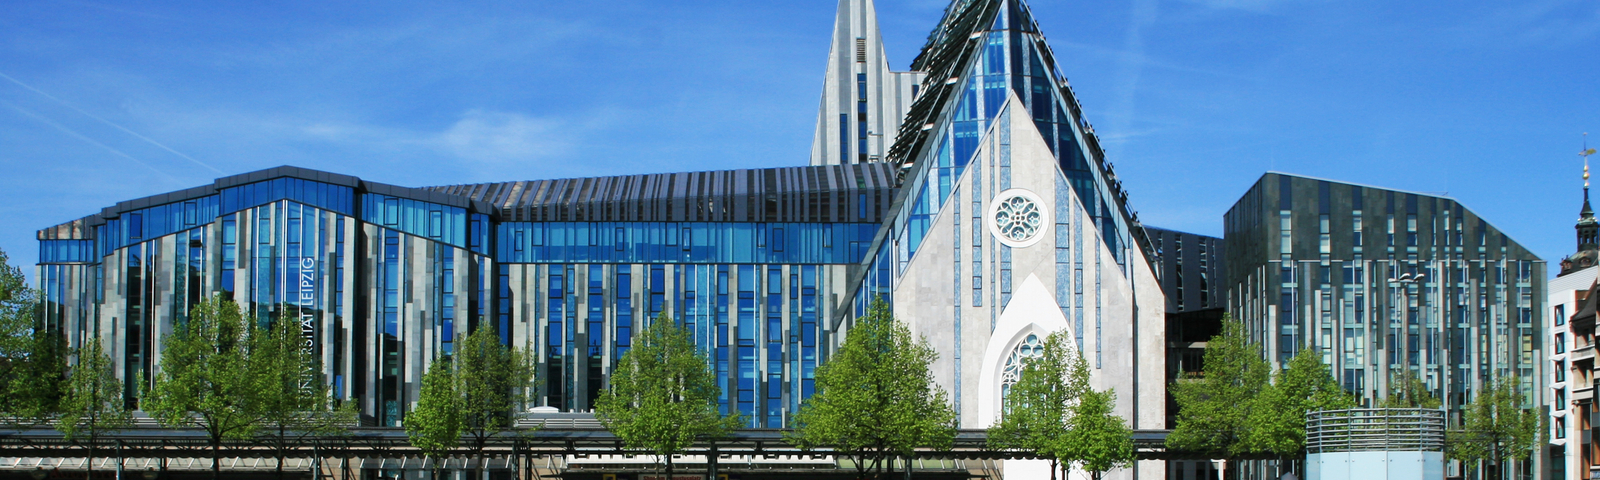 Reference - Referenzbericht: Augustkirche/ Universität Leipzig, Leipzig